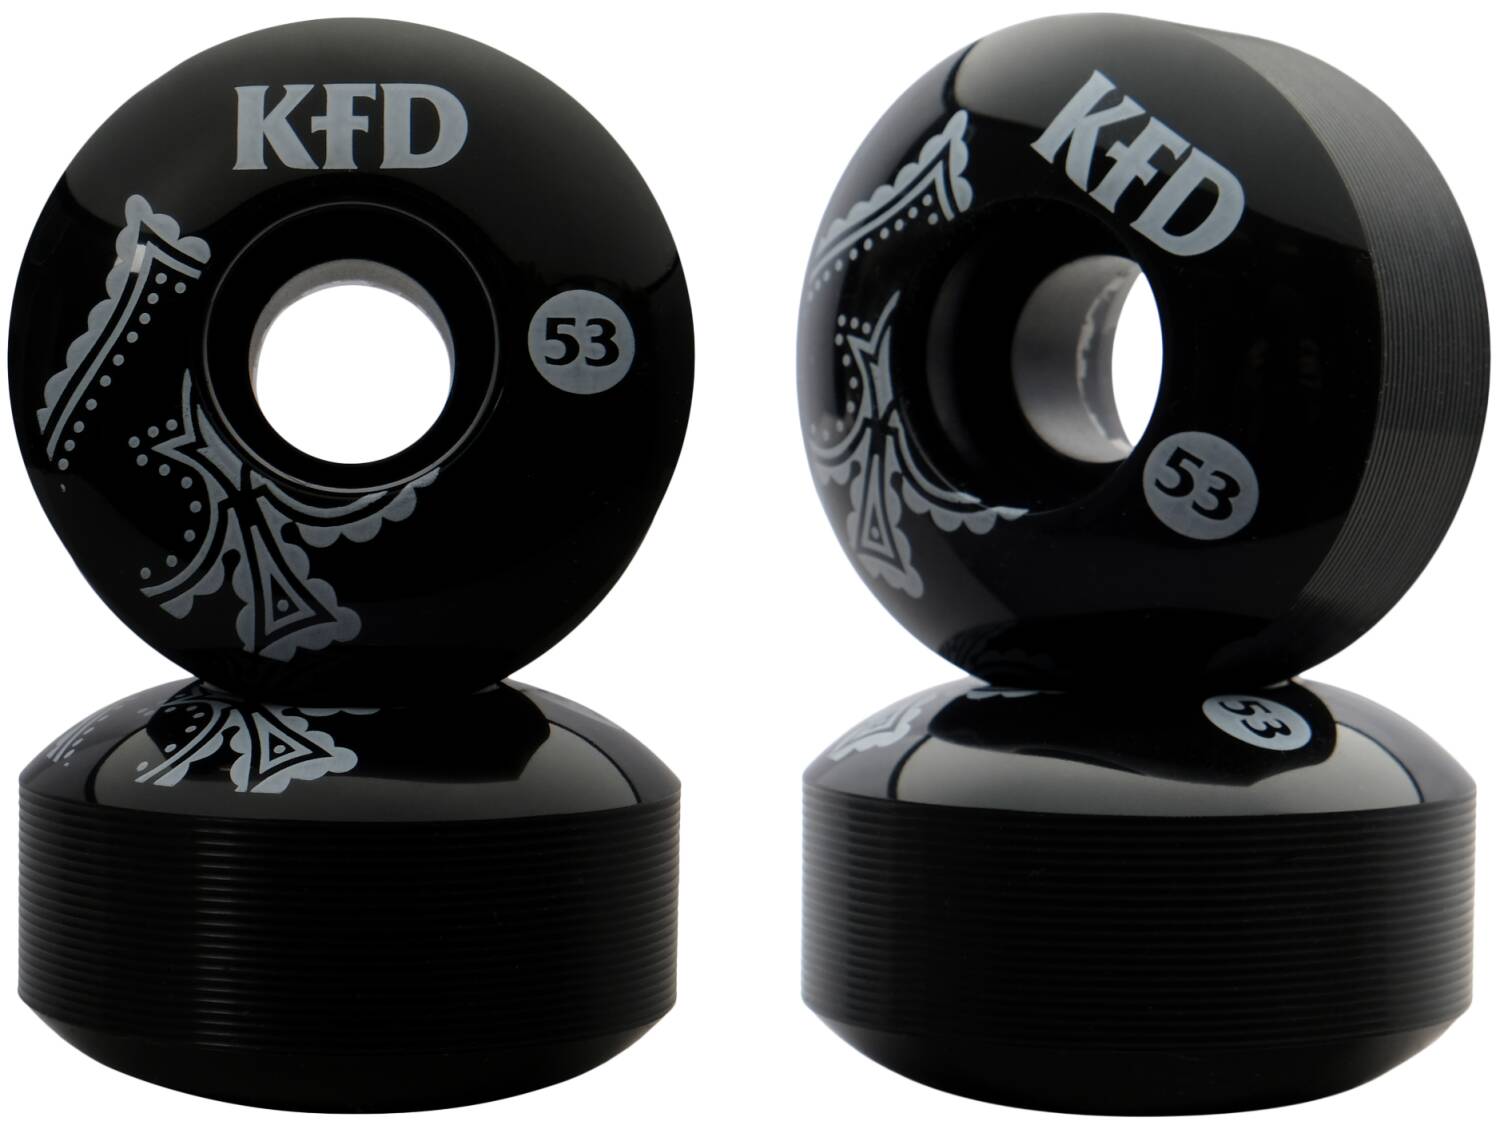 KFD Team Skateboard hjul 4-Pack (Bandana)